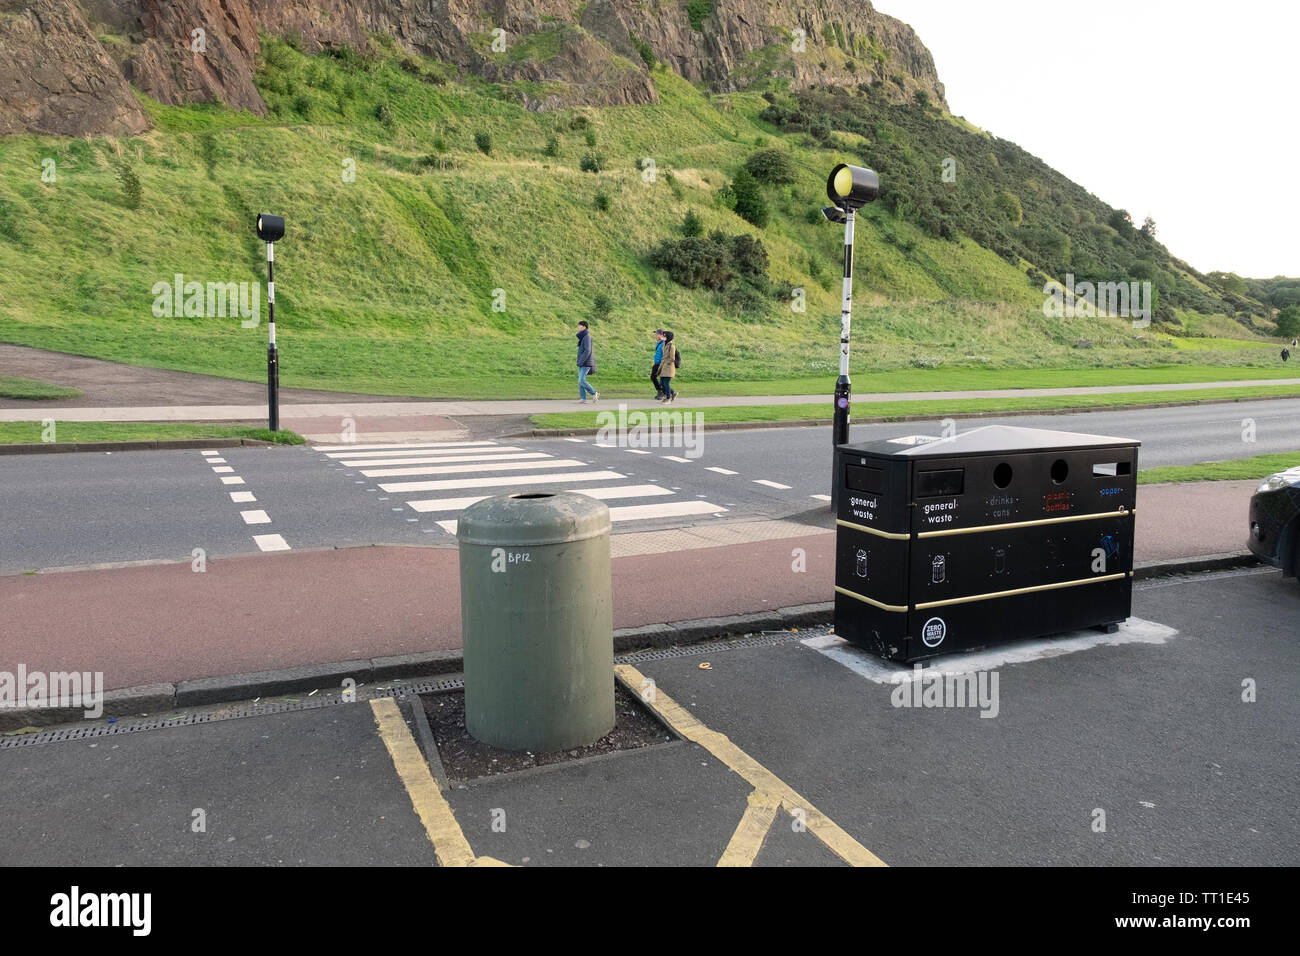 Street furniture - zebra crossing, bin and recycling bin and people by the roadside in Holyrood Park, Edinburgh,Scotland Stock Photo